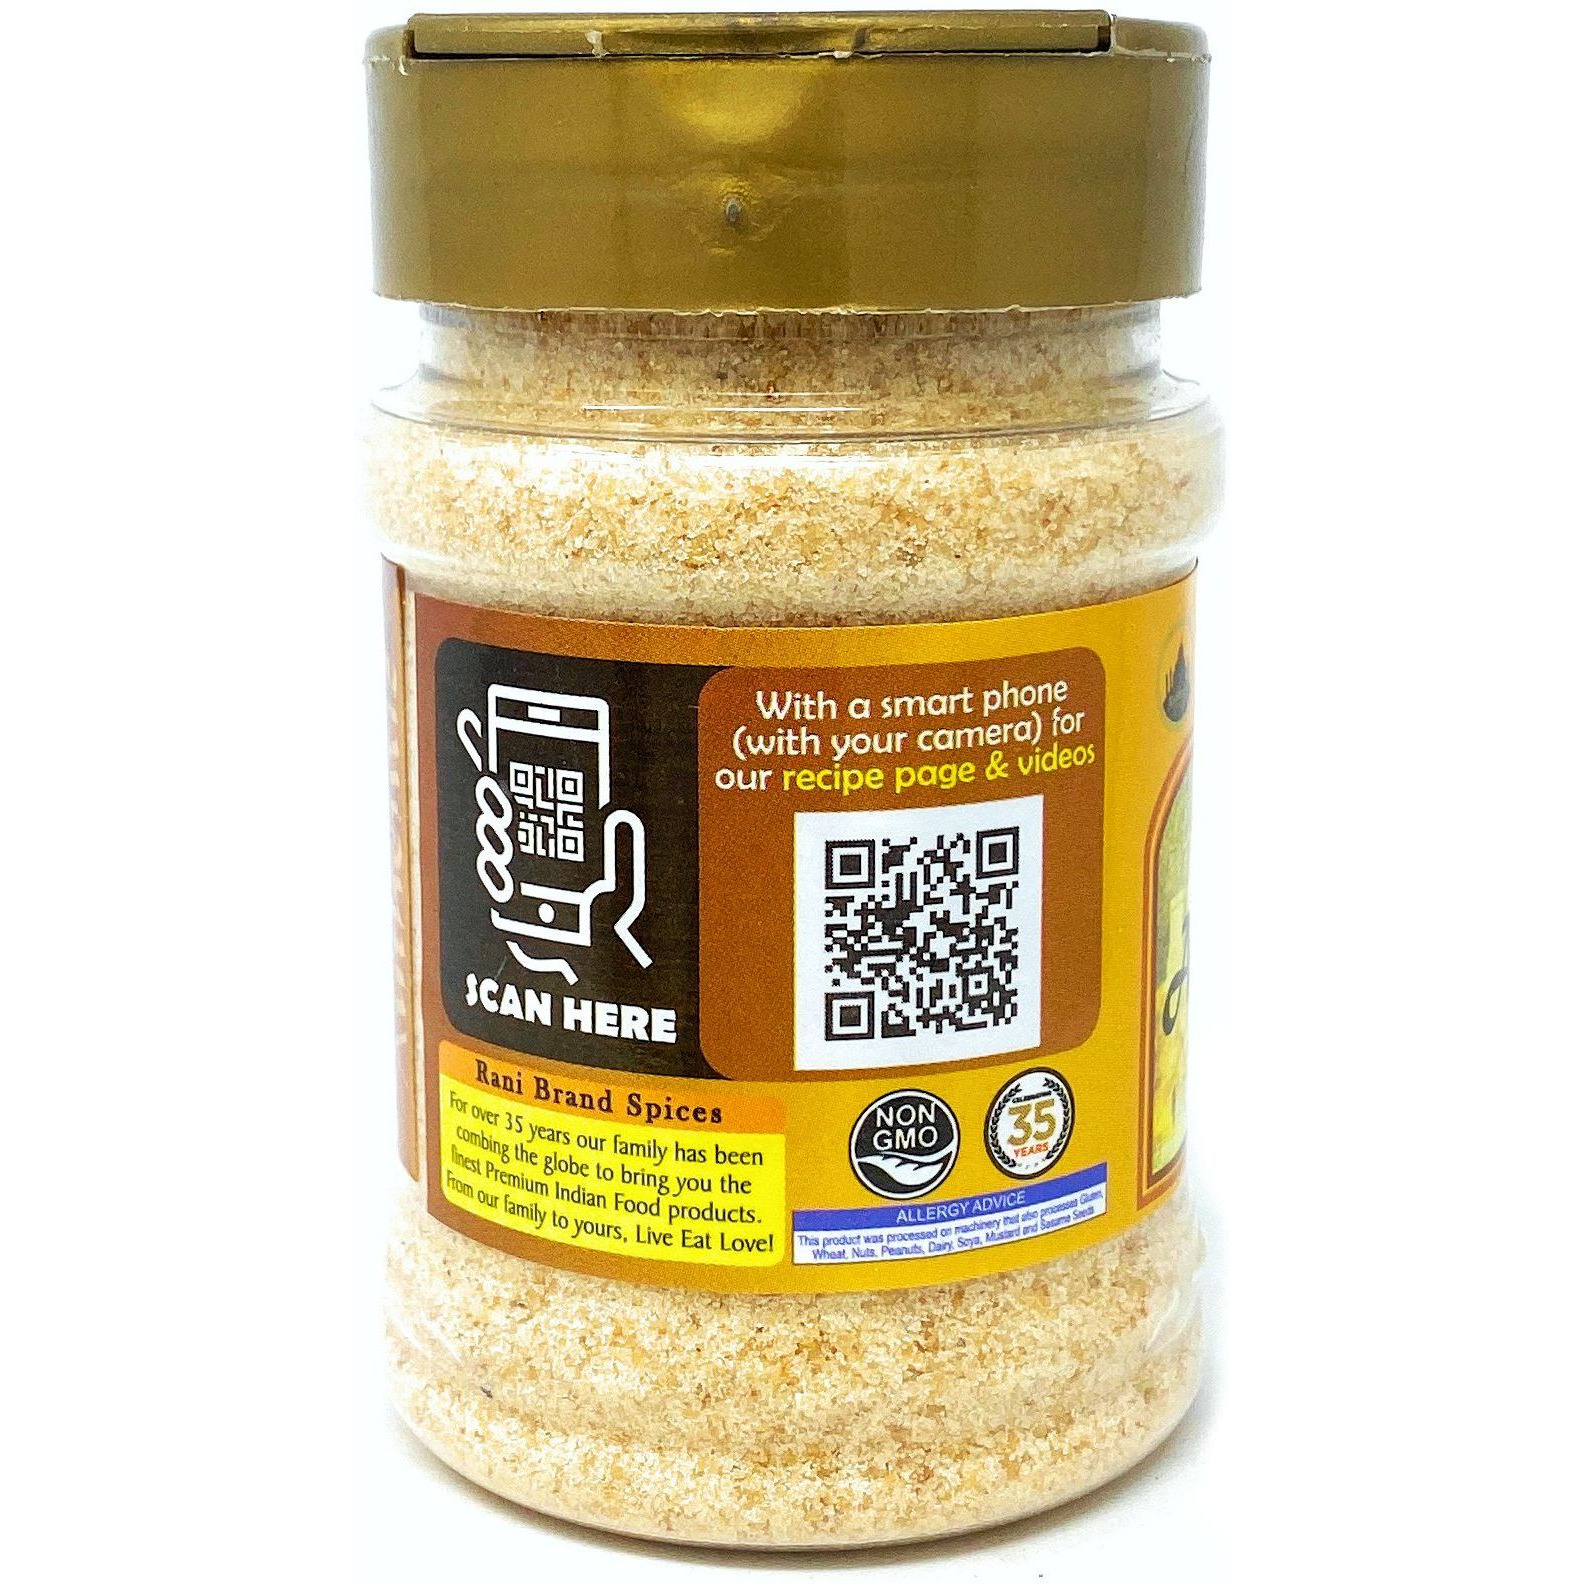 Rani Asafetida (Hing) Ground 3.75oz (106g) ~ All Natural | Salt Free | Vegan | NON-GMO | Asafoetida Indian Spice | Best for Onion Garlic Substitute